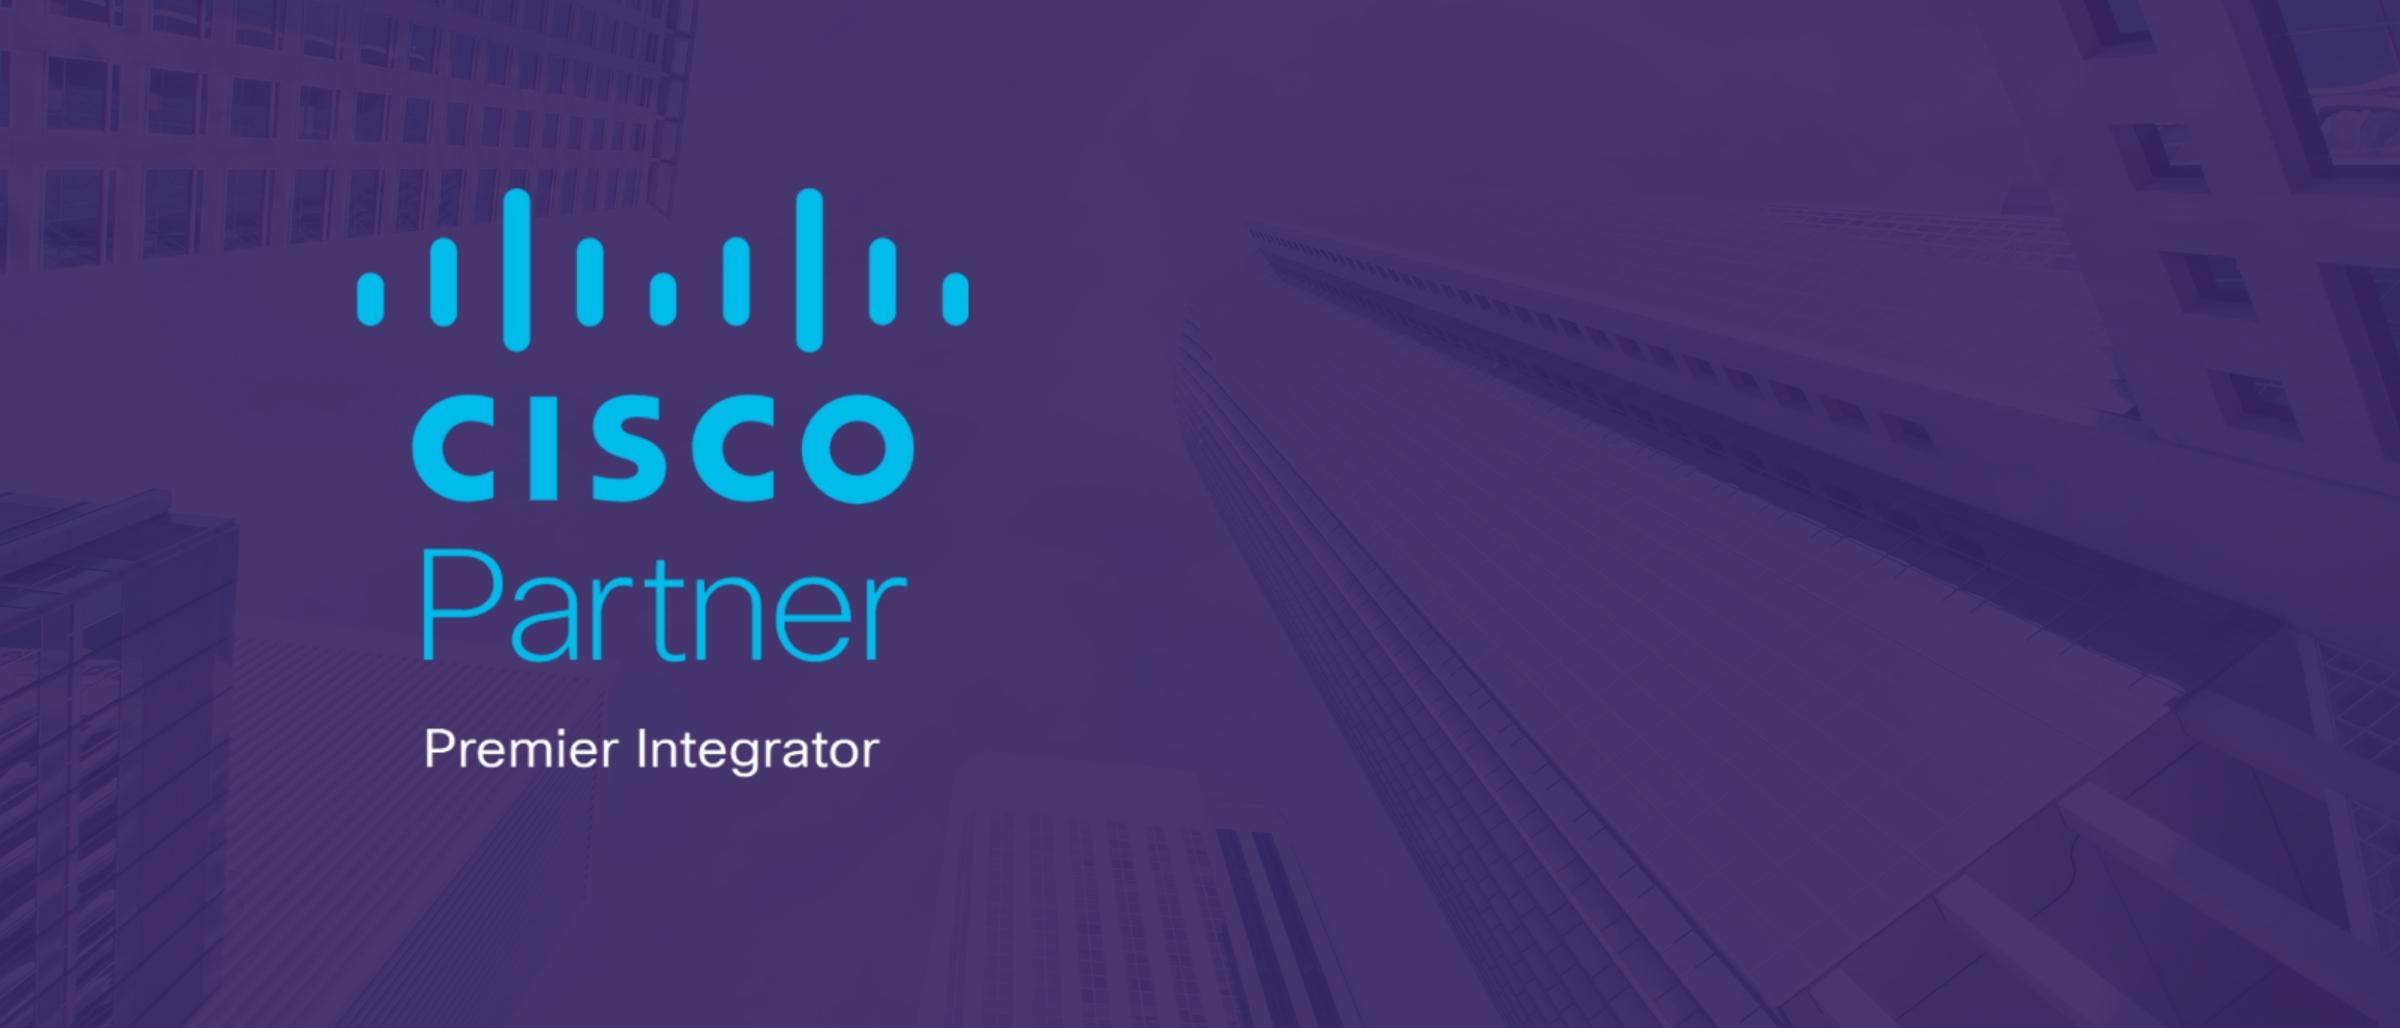 Cisco Partner - Premier Integrator Logo